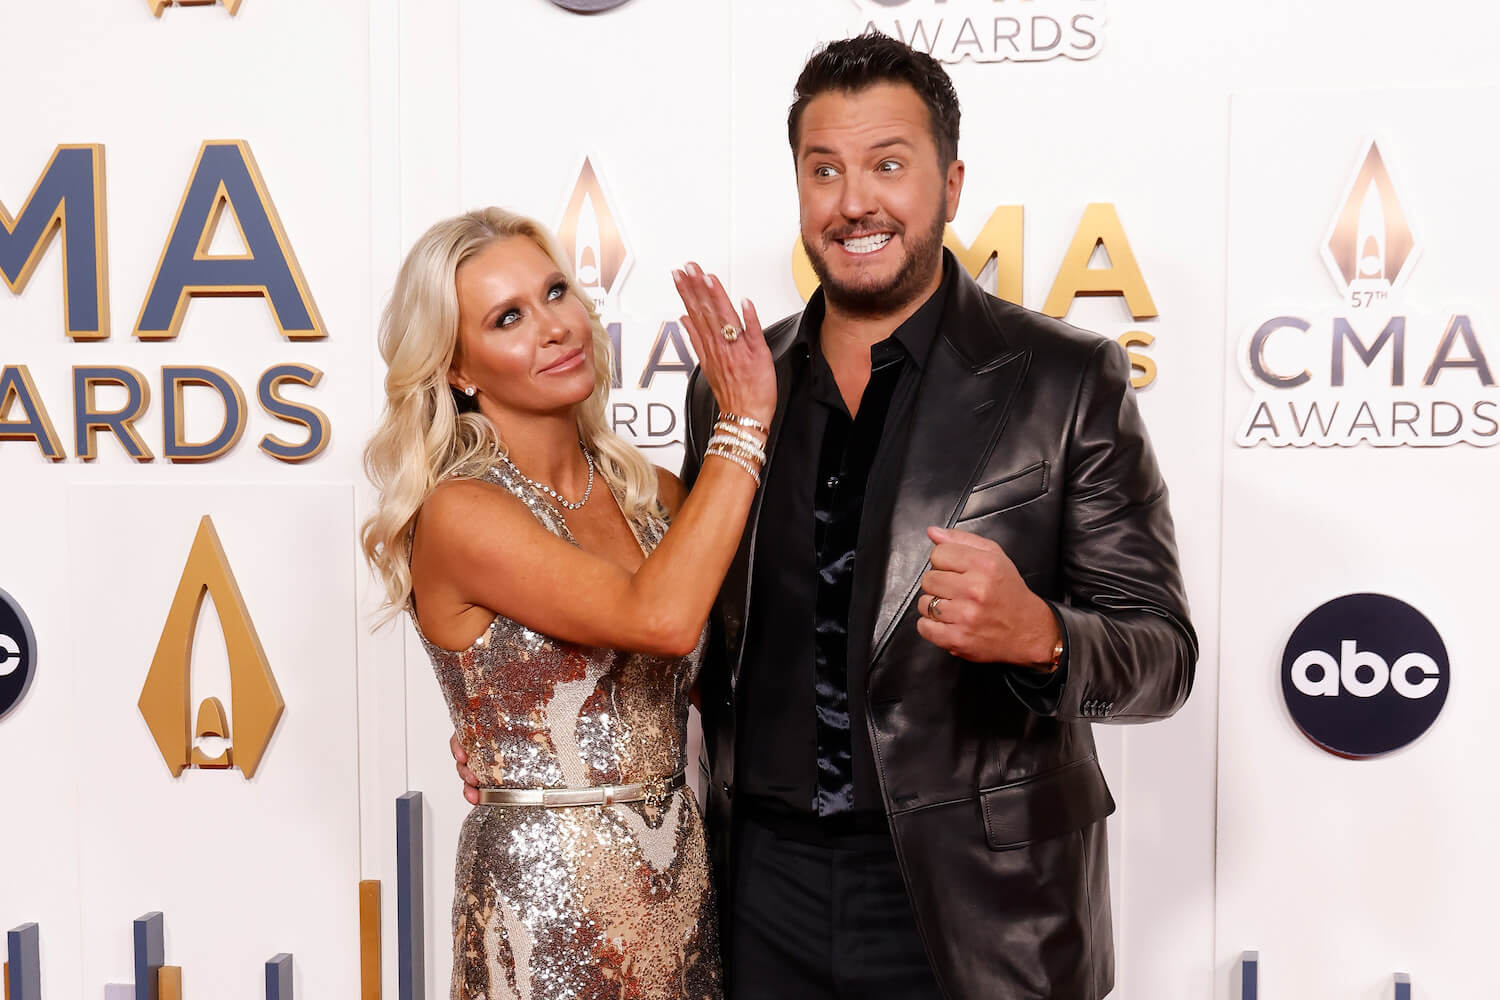 Luke Bryan striking a funny pose with his wife, Caroline Bryan, at the 2023 CMA Awards